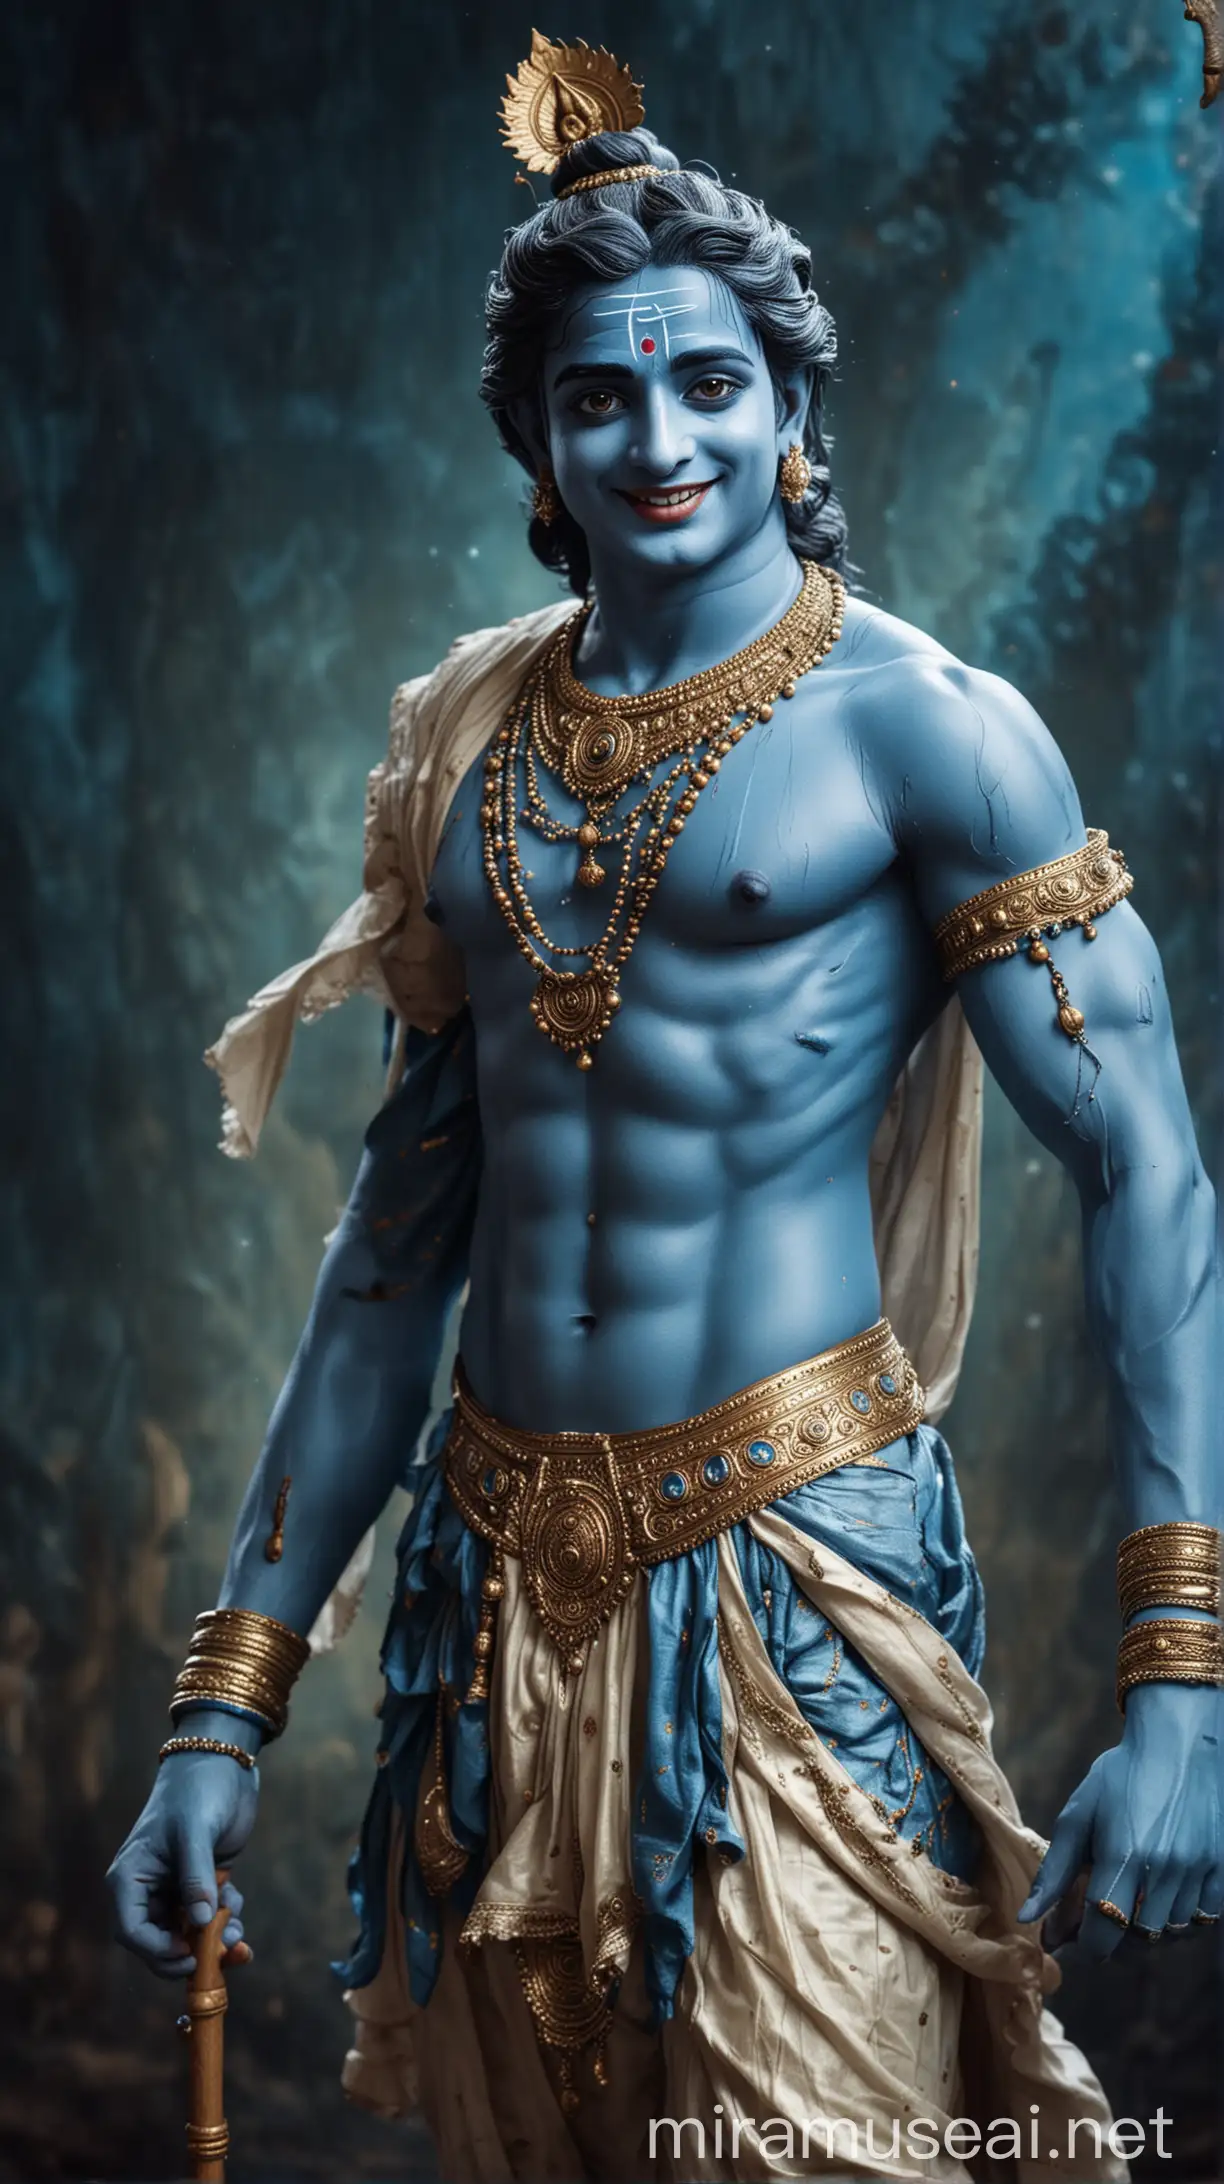 Smiling Lord Krishna with Blue Skin in Mahabharata Setting